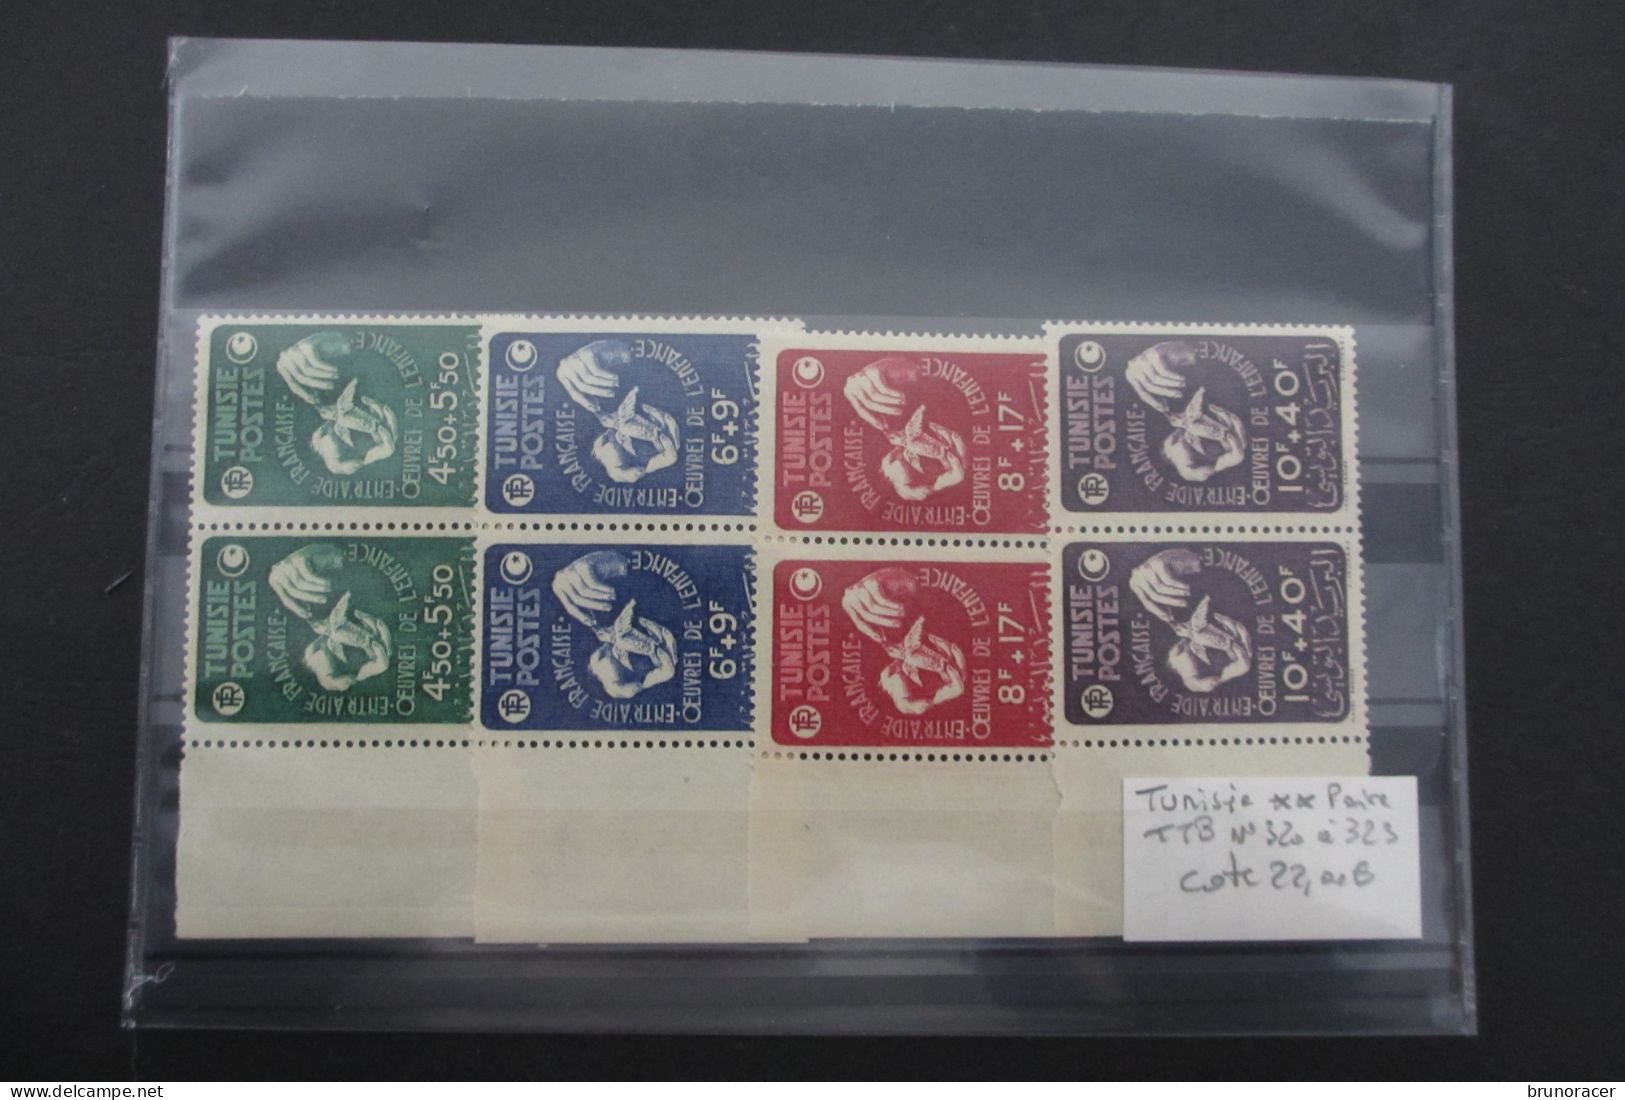 TUNISIE N°320 à 323 EN PAIRES BDF NEUF** TTB COTE 22 EUROS  VOIR SCANS - Unused Stamps